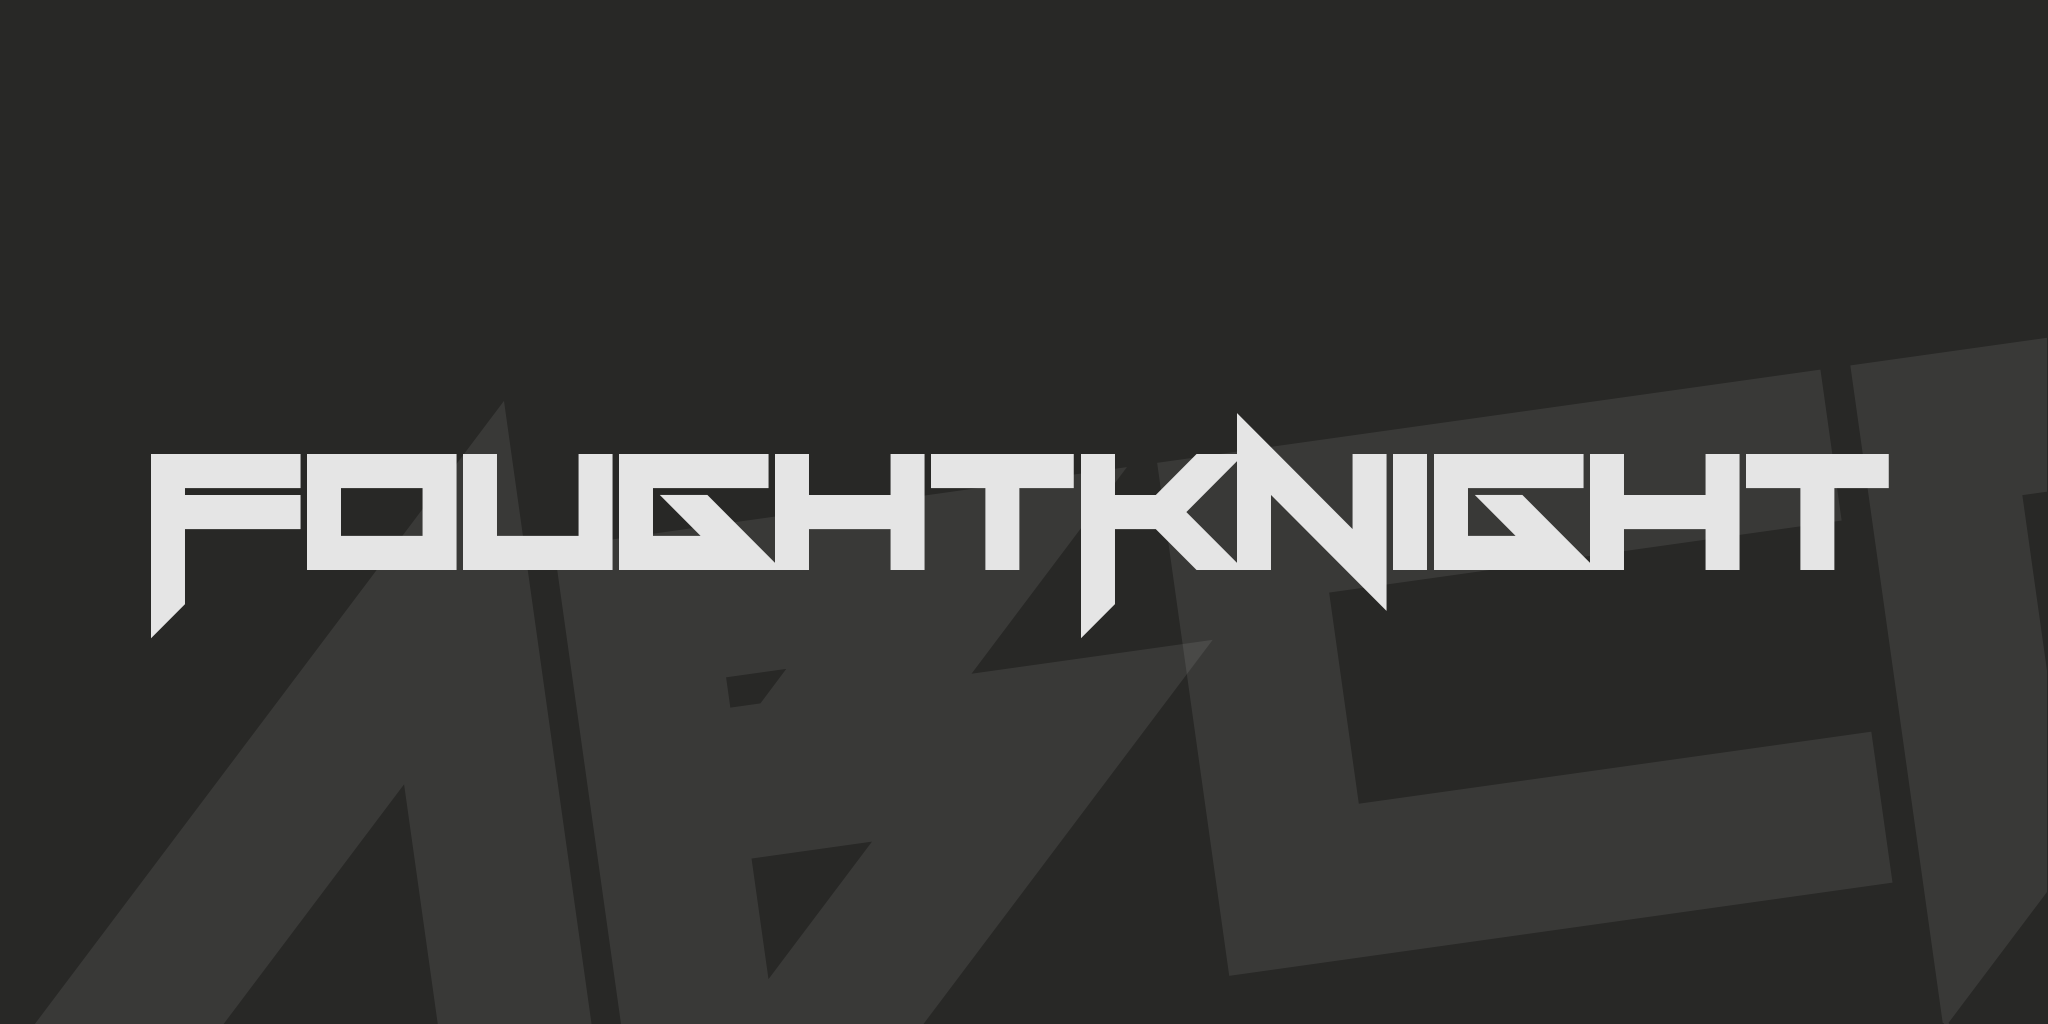 Fought Knight